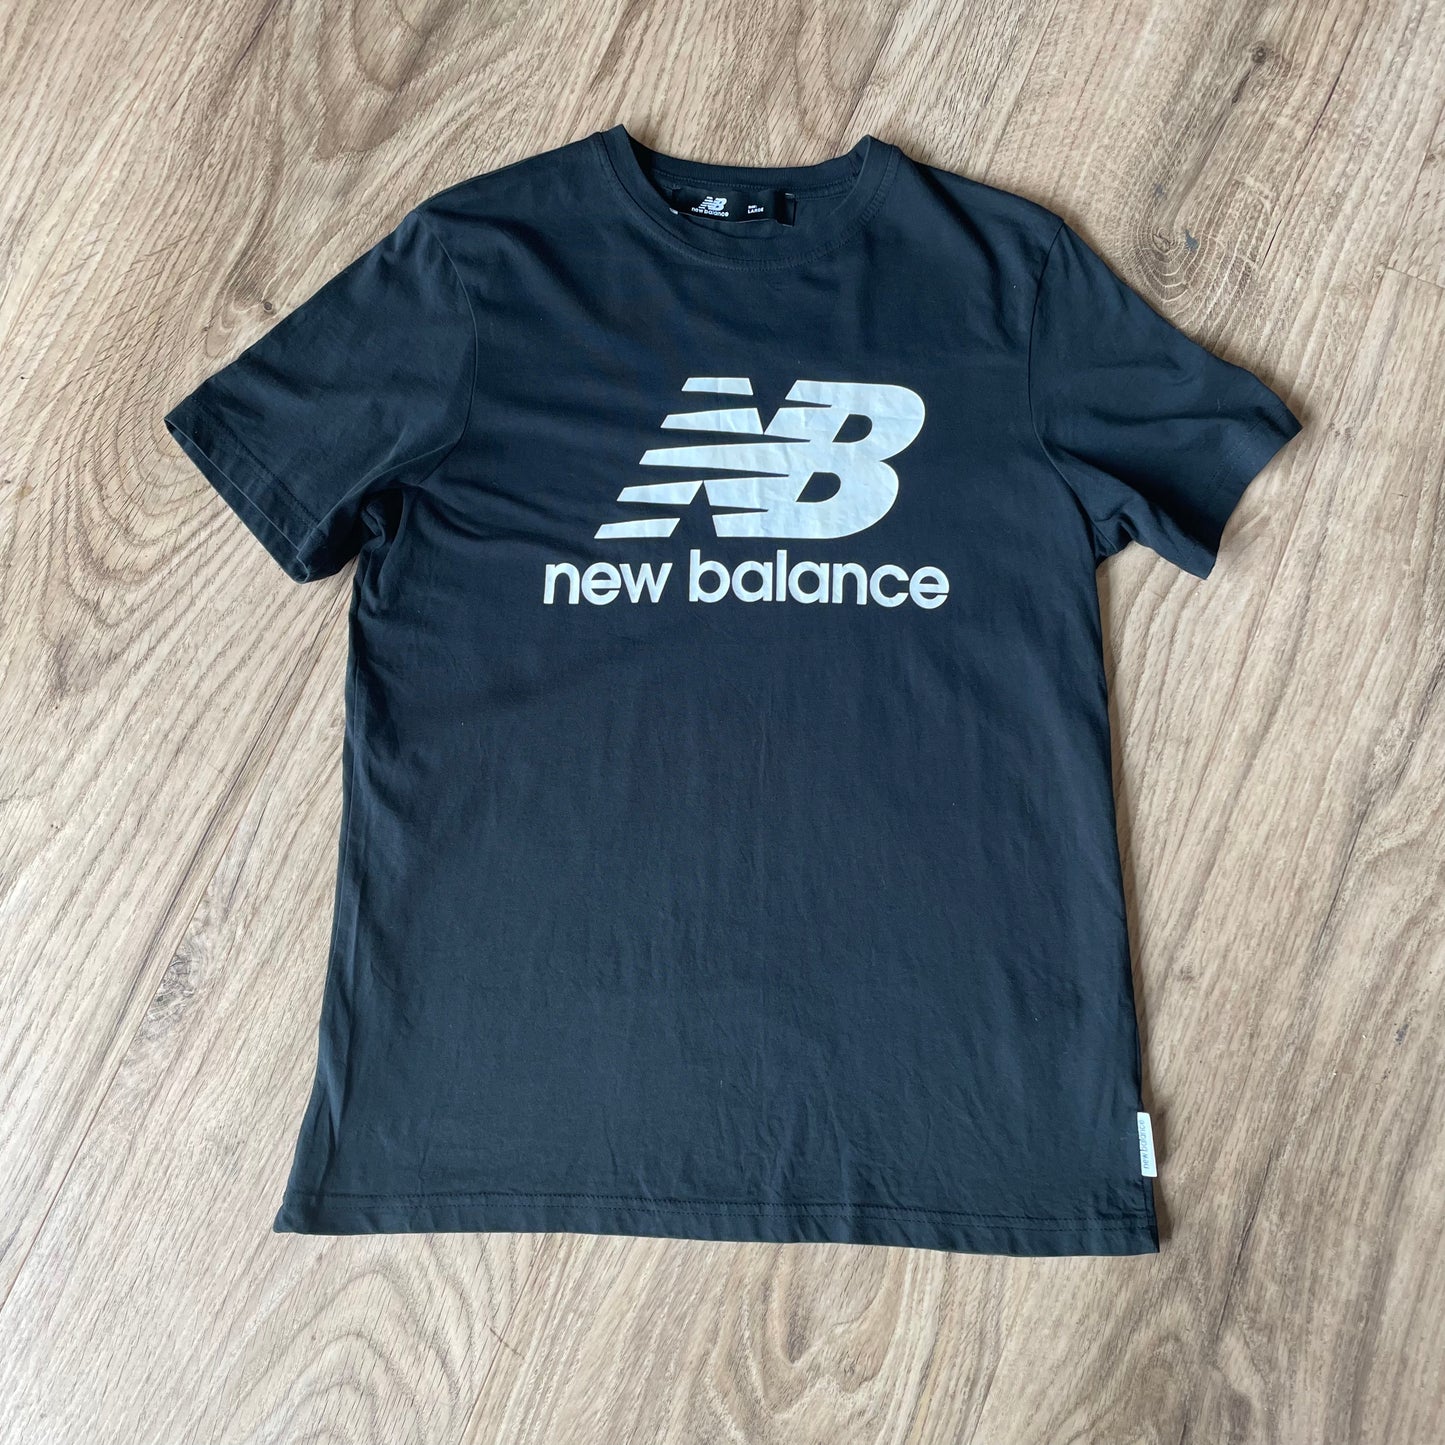 New balance T-shirt